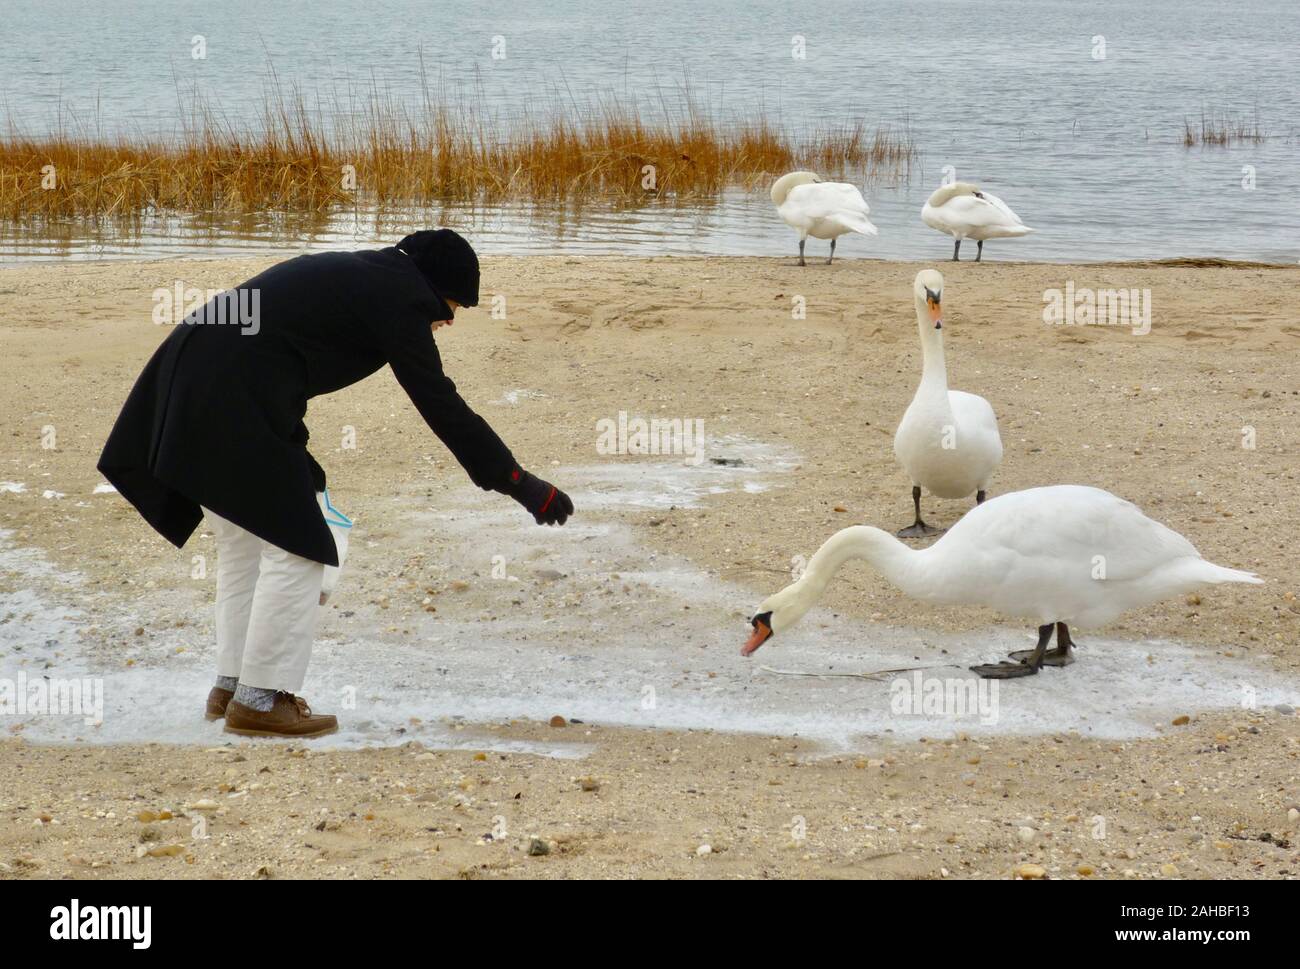 Woman feeding swans on a winter beach. Stock Photo